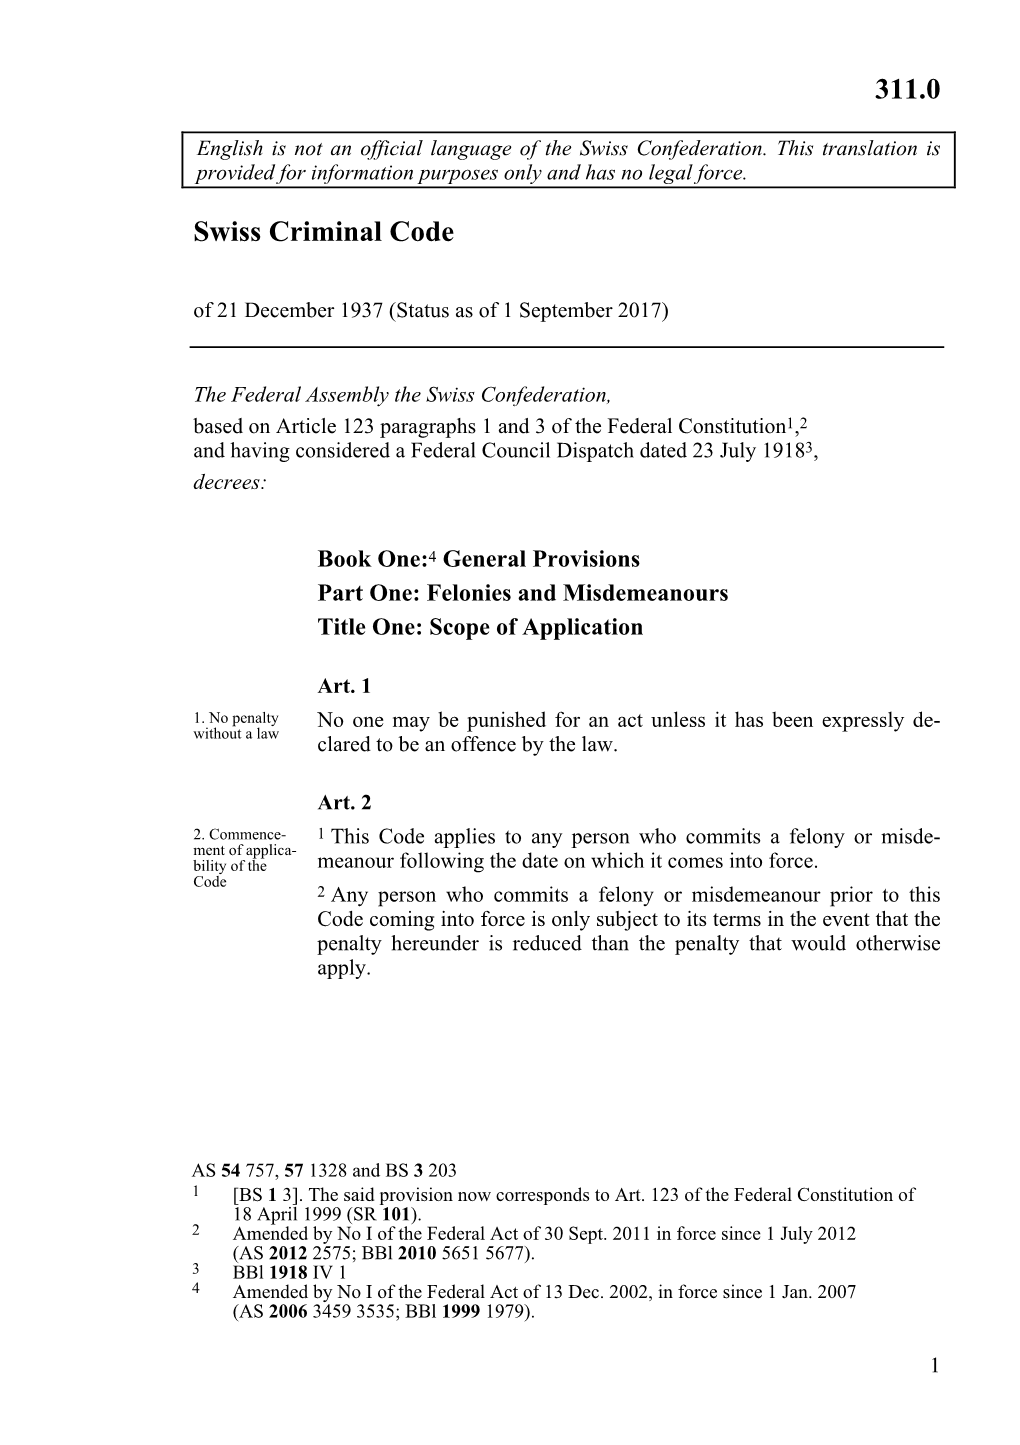 Swiss Criminal Code 311.0